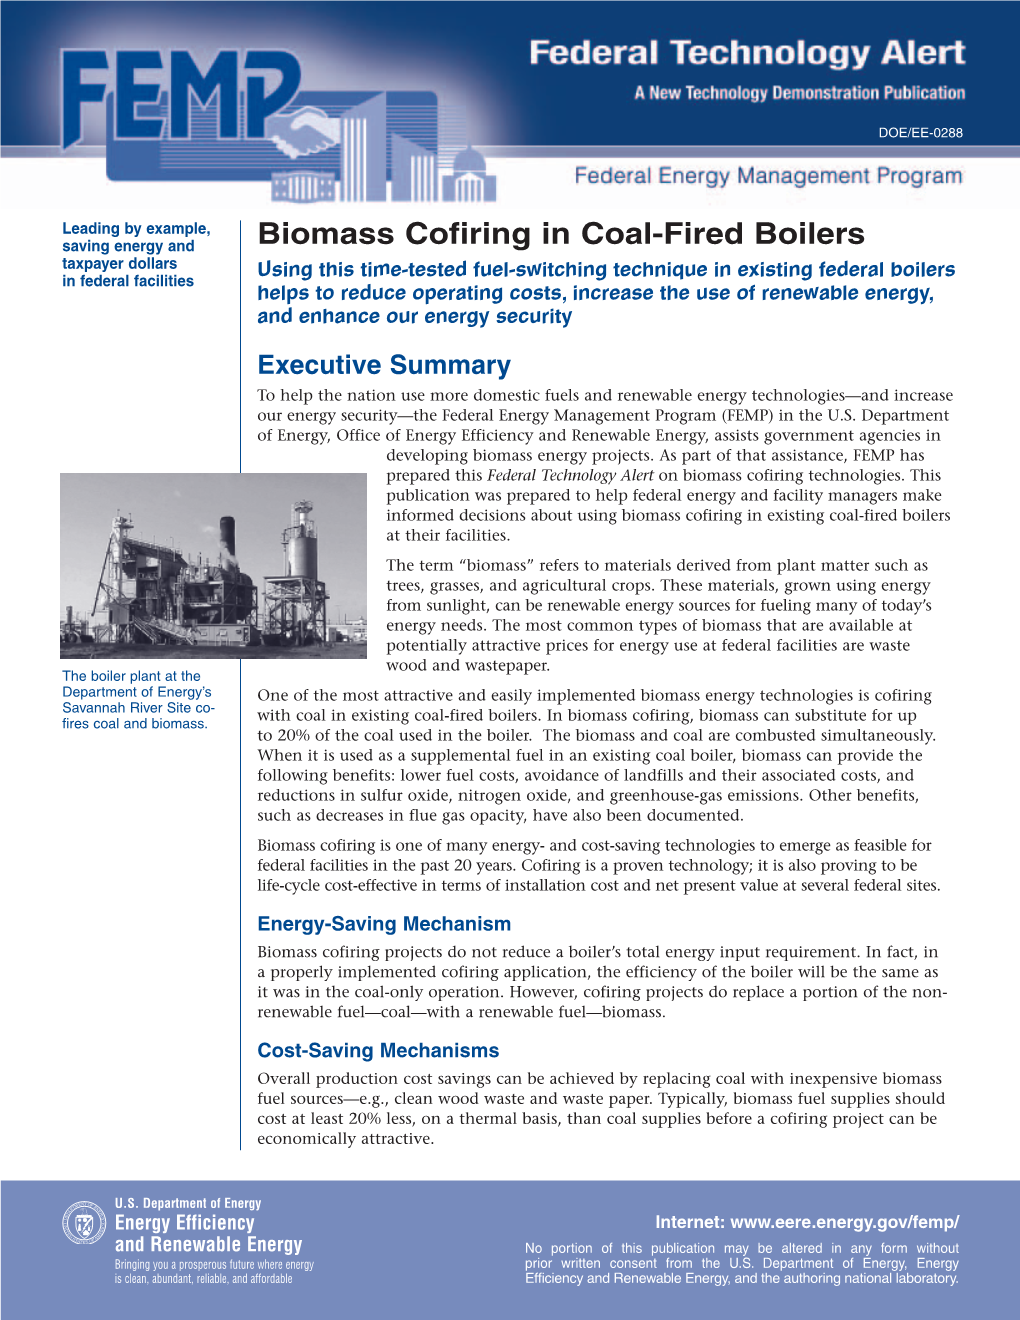 Biomass Cofiring in Coal-Fired Boilers